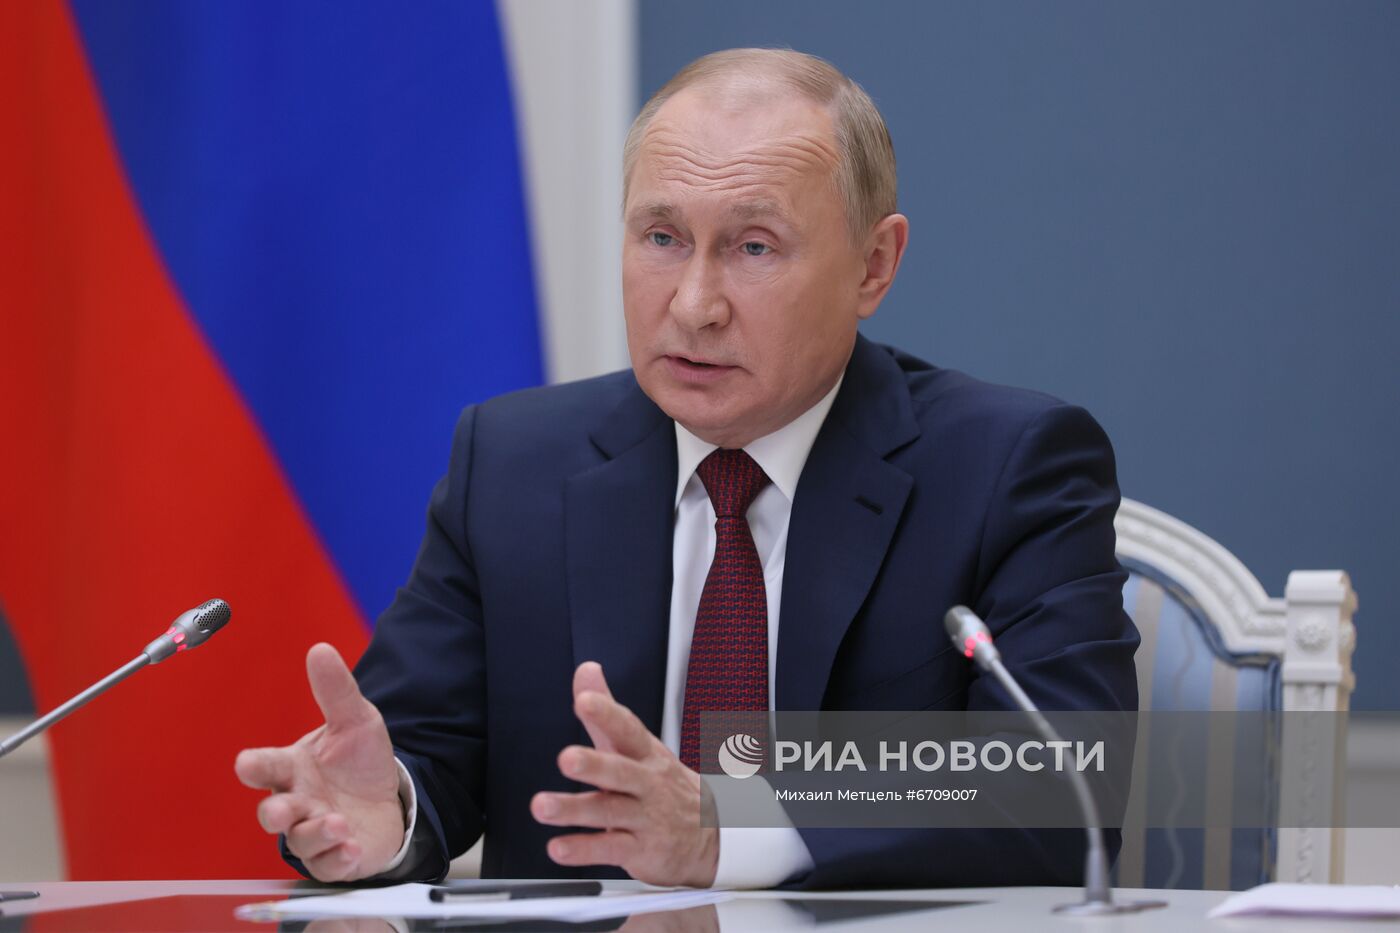 Президент РФ В. Путин принял участие в форуме "Россия зовет!"